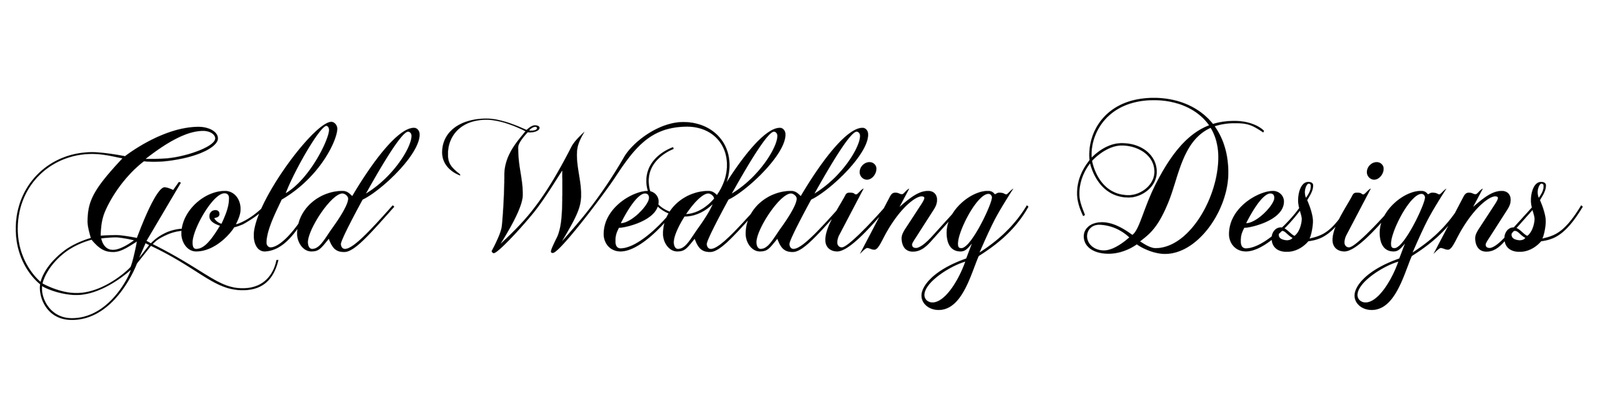 Wedding Invitations - Gold Wedding Designs